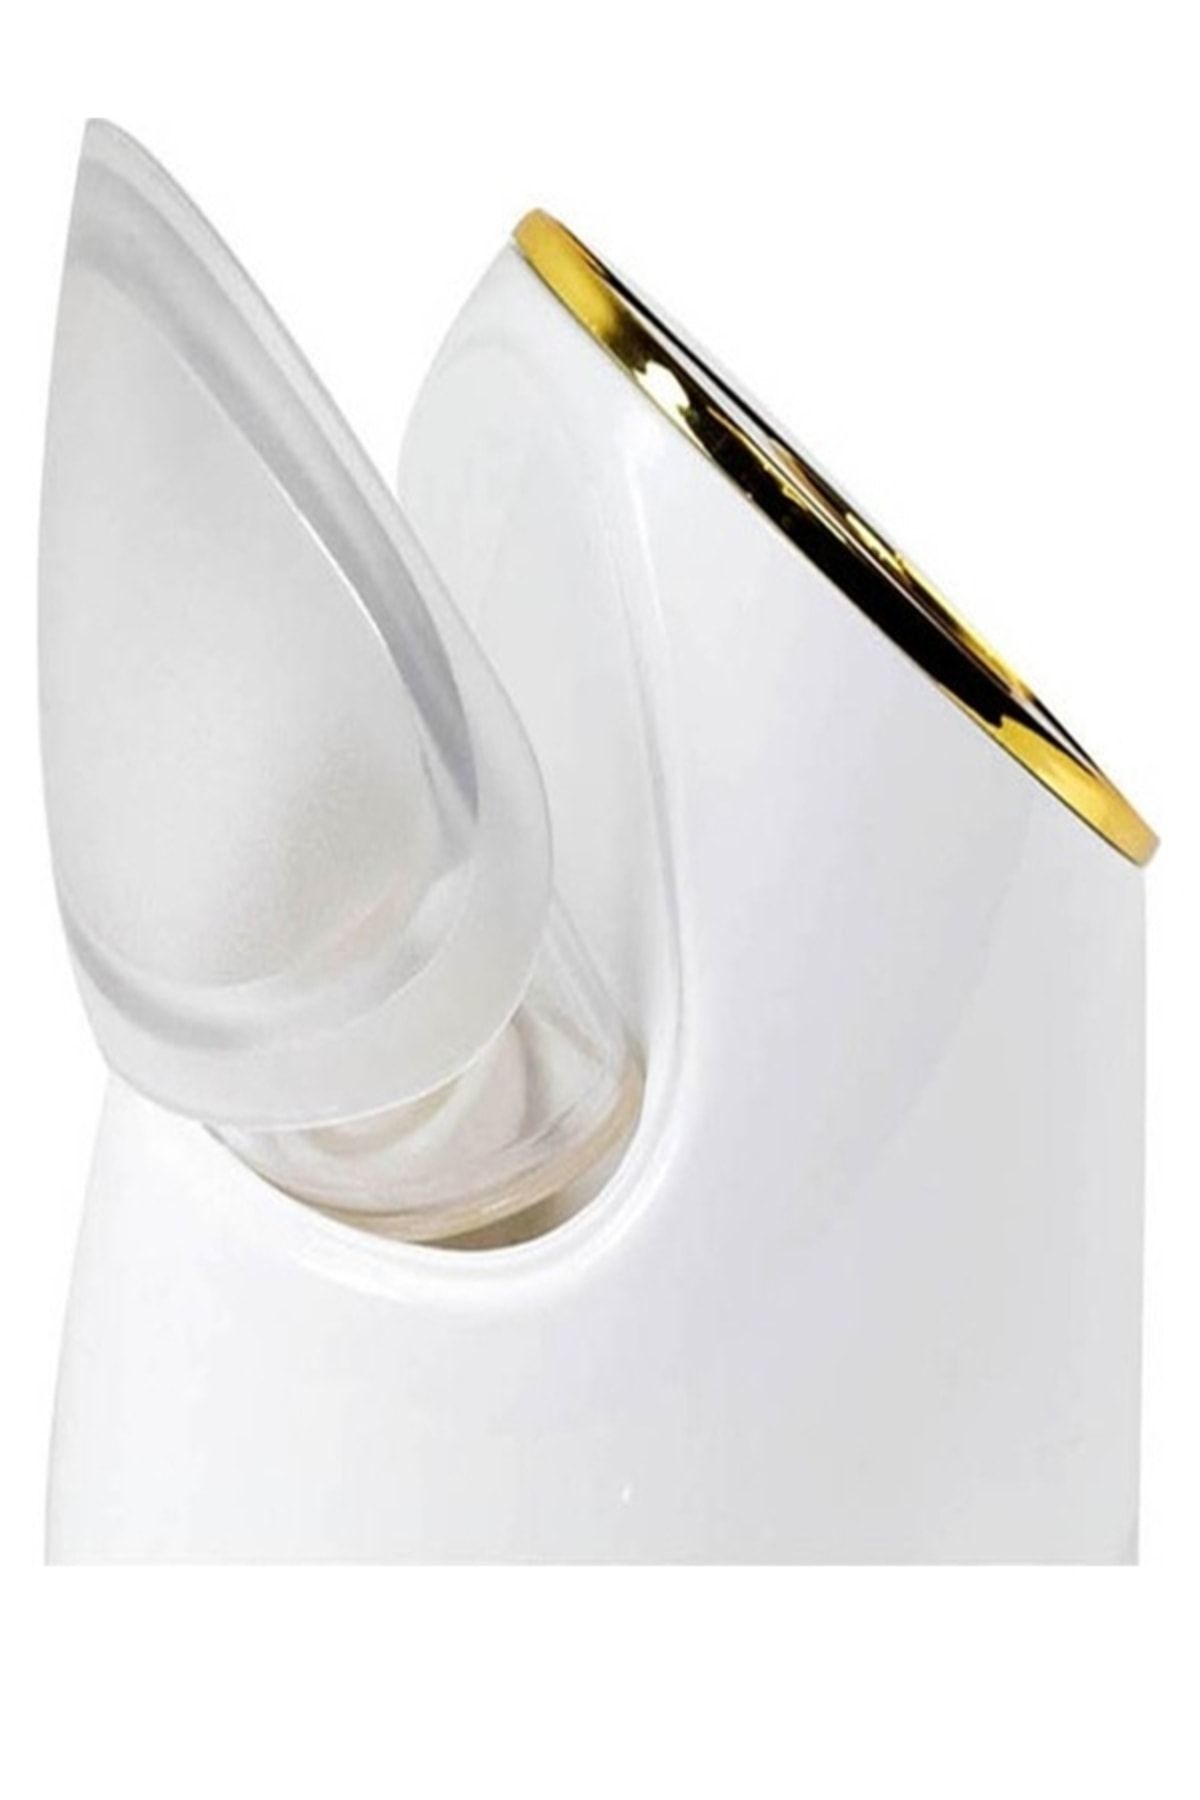 Nascita دستگاه بخاری صورت نانو یونیک پاک کننده چهره گروه اعتباری